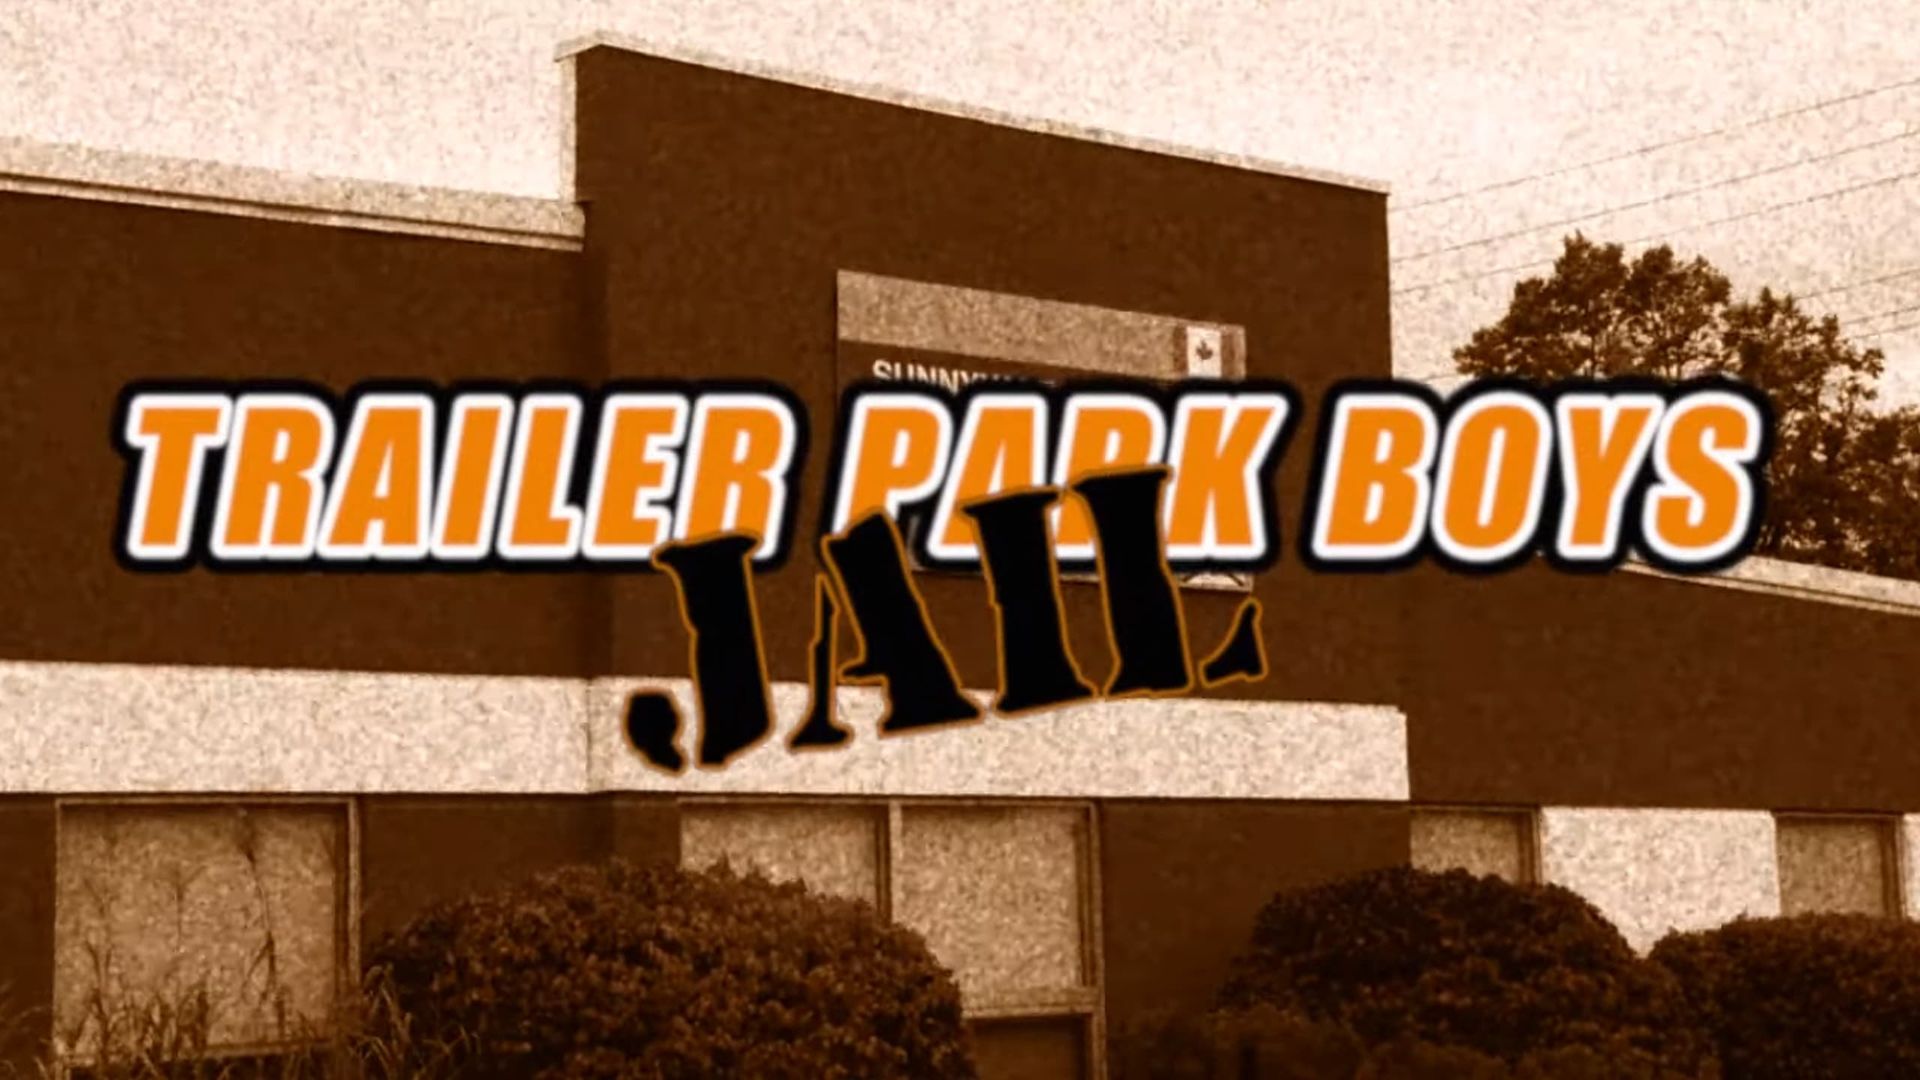 Trailer Park Boys: Jail background